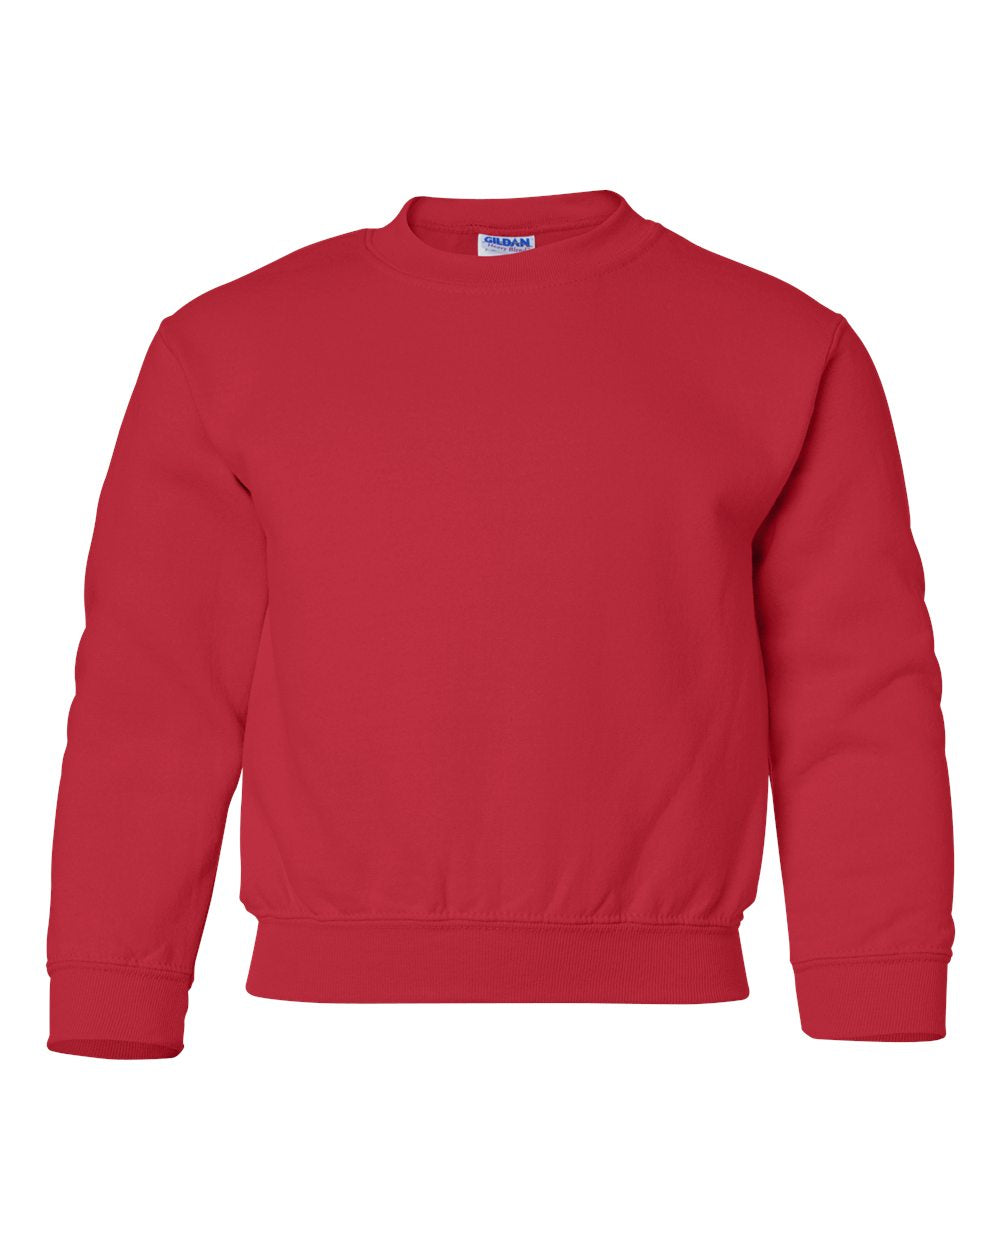 Gildan Youth Crewneck Sweatshirt (18000b) in Red